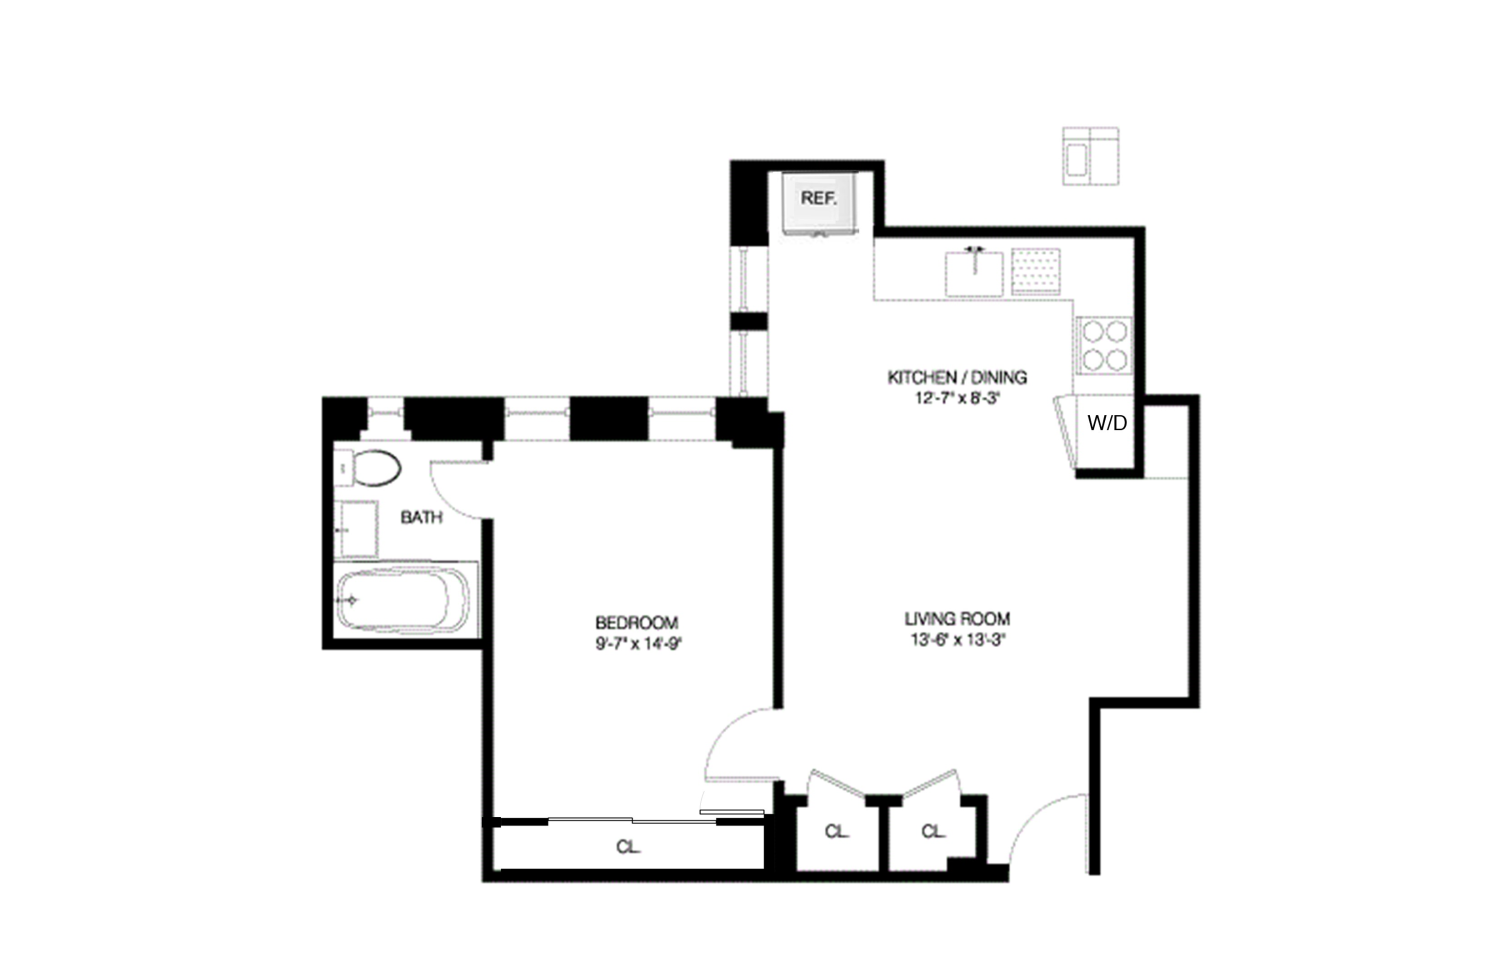 Floorplan for 24-65 38th Street